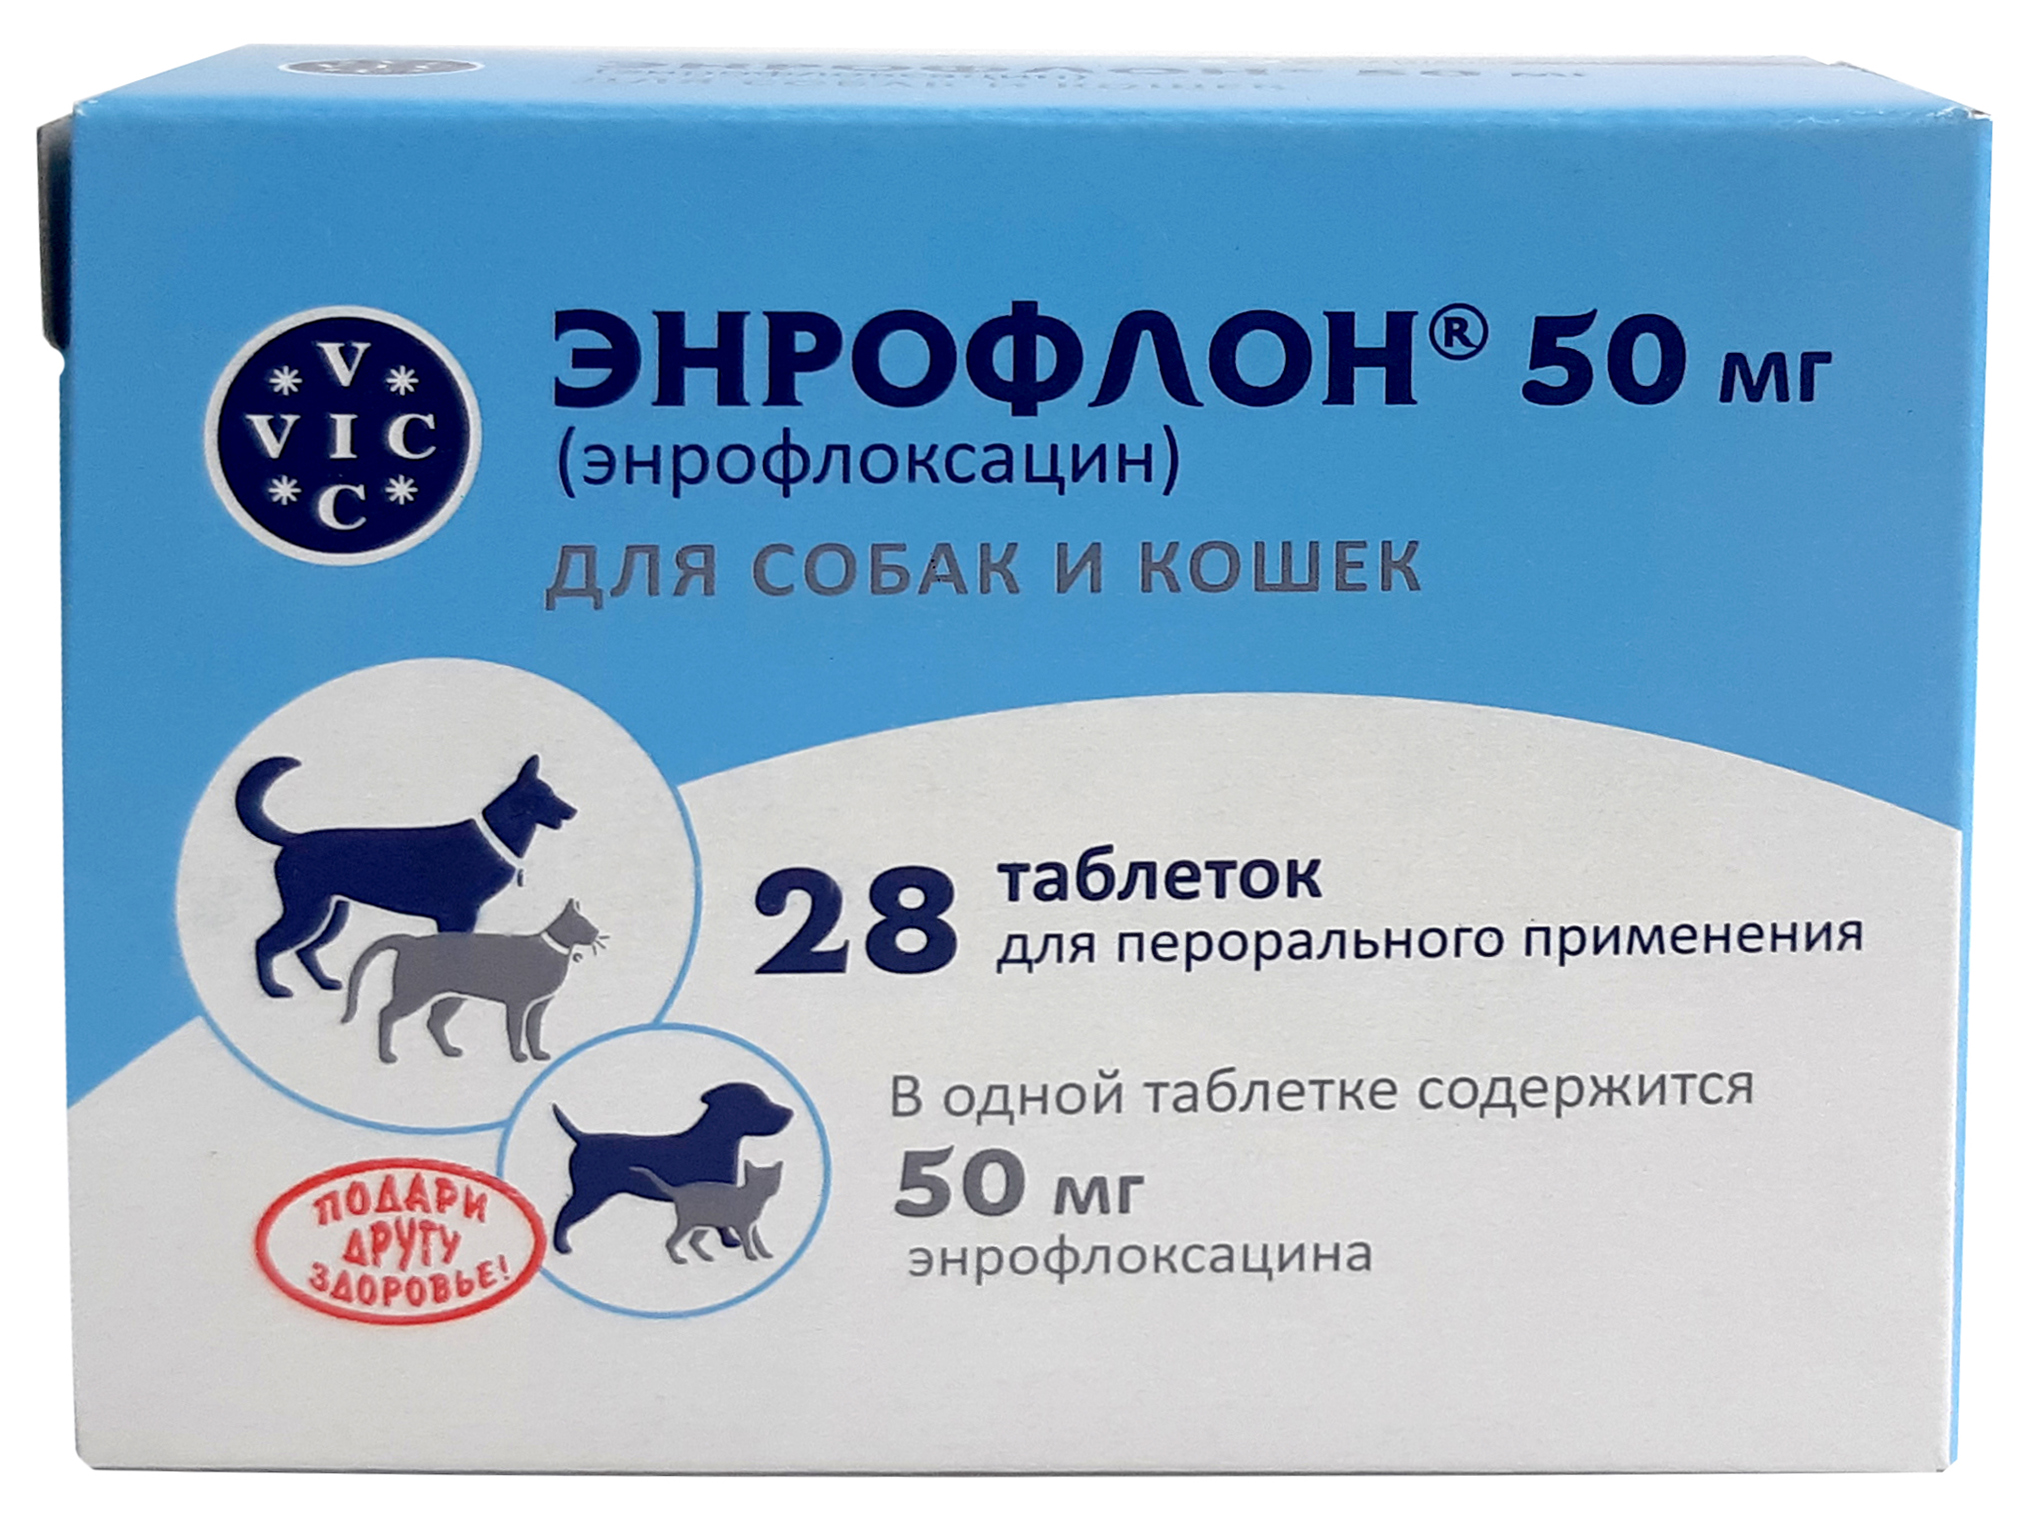 Тилодокс 200 – инструкция по применению препарата в ветеринарии